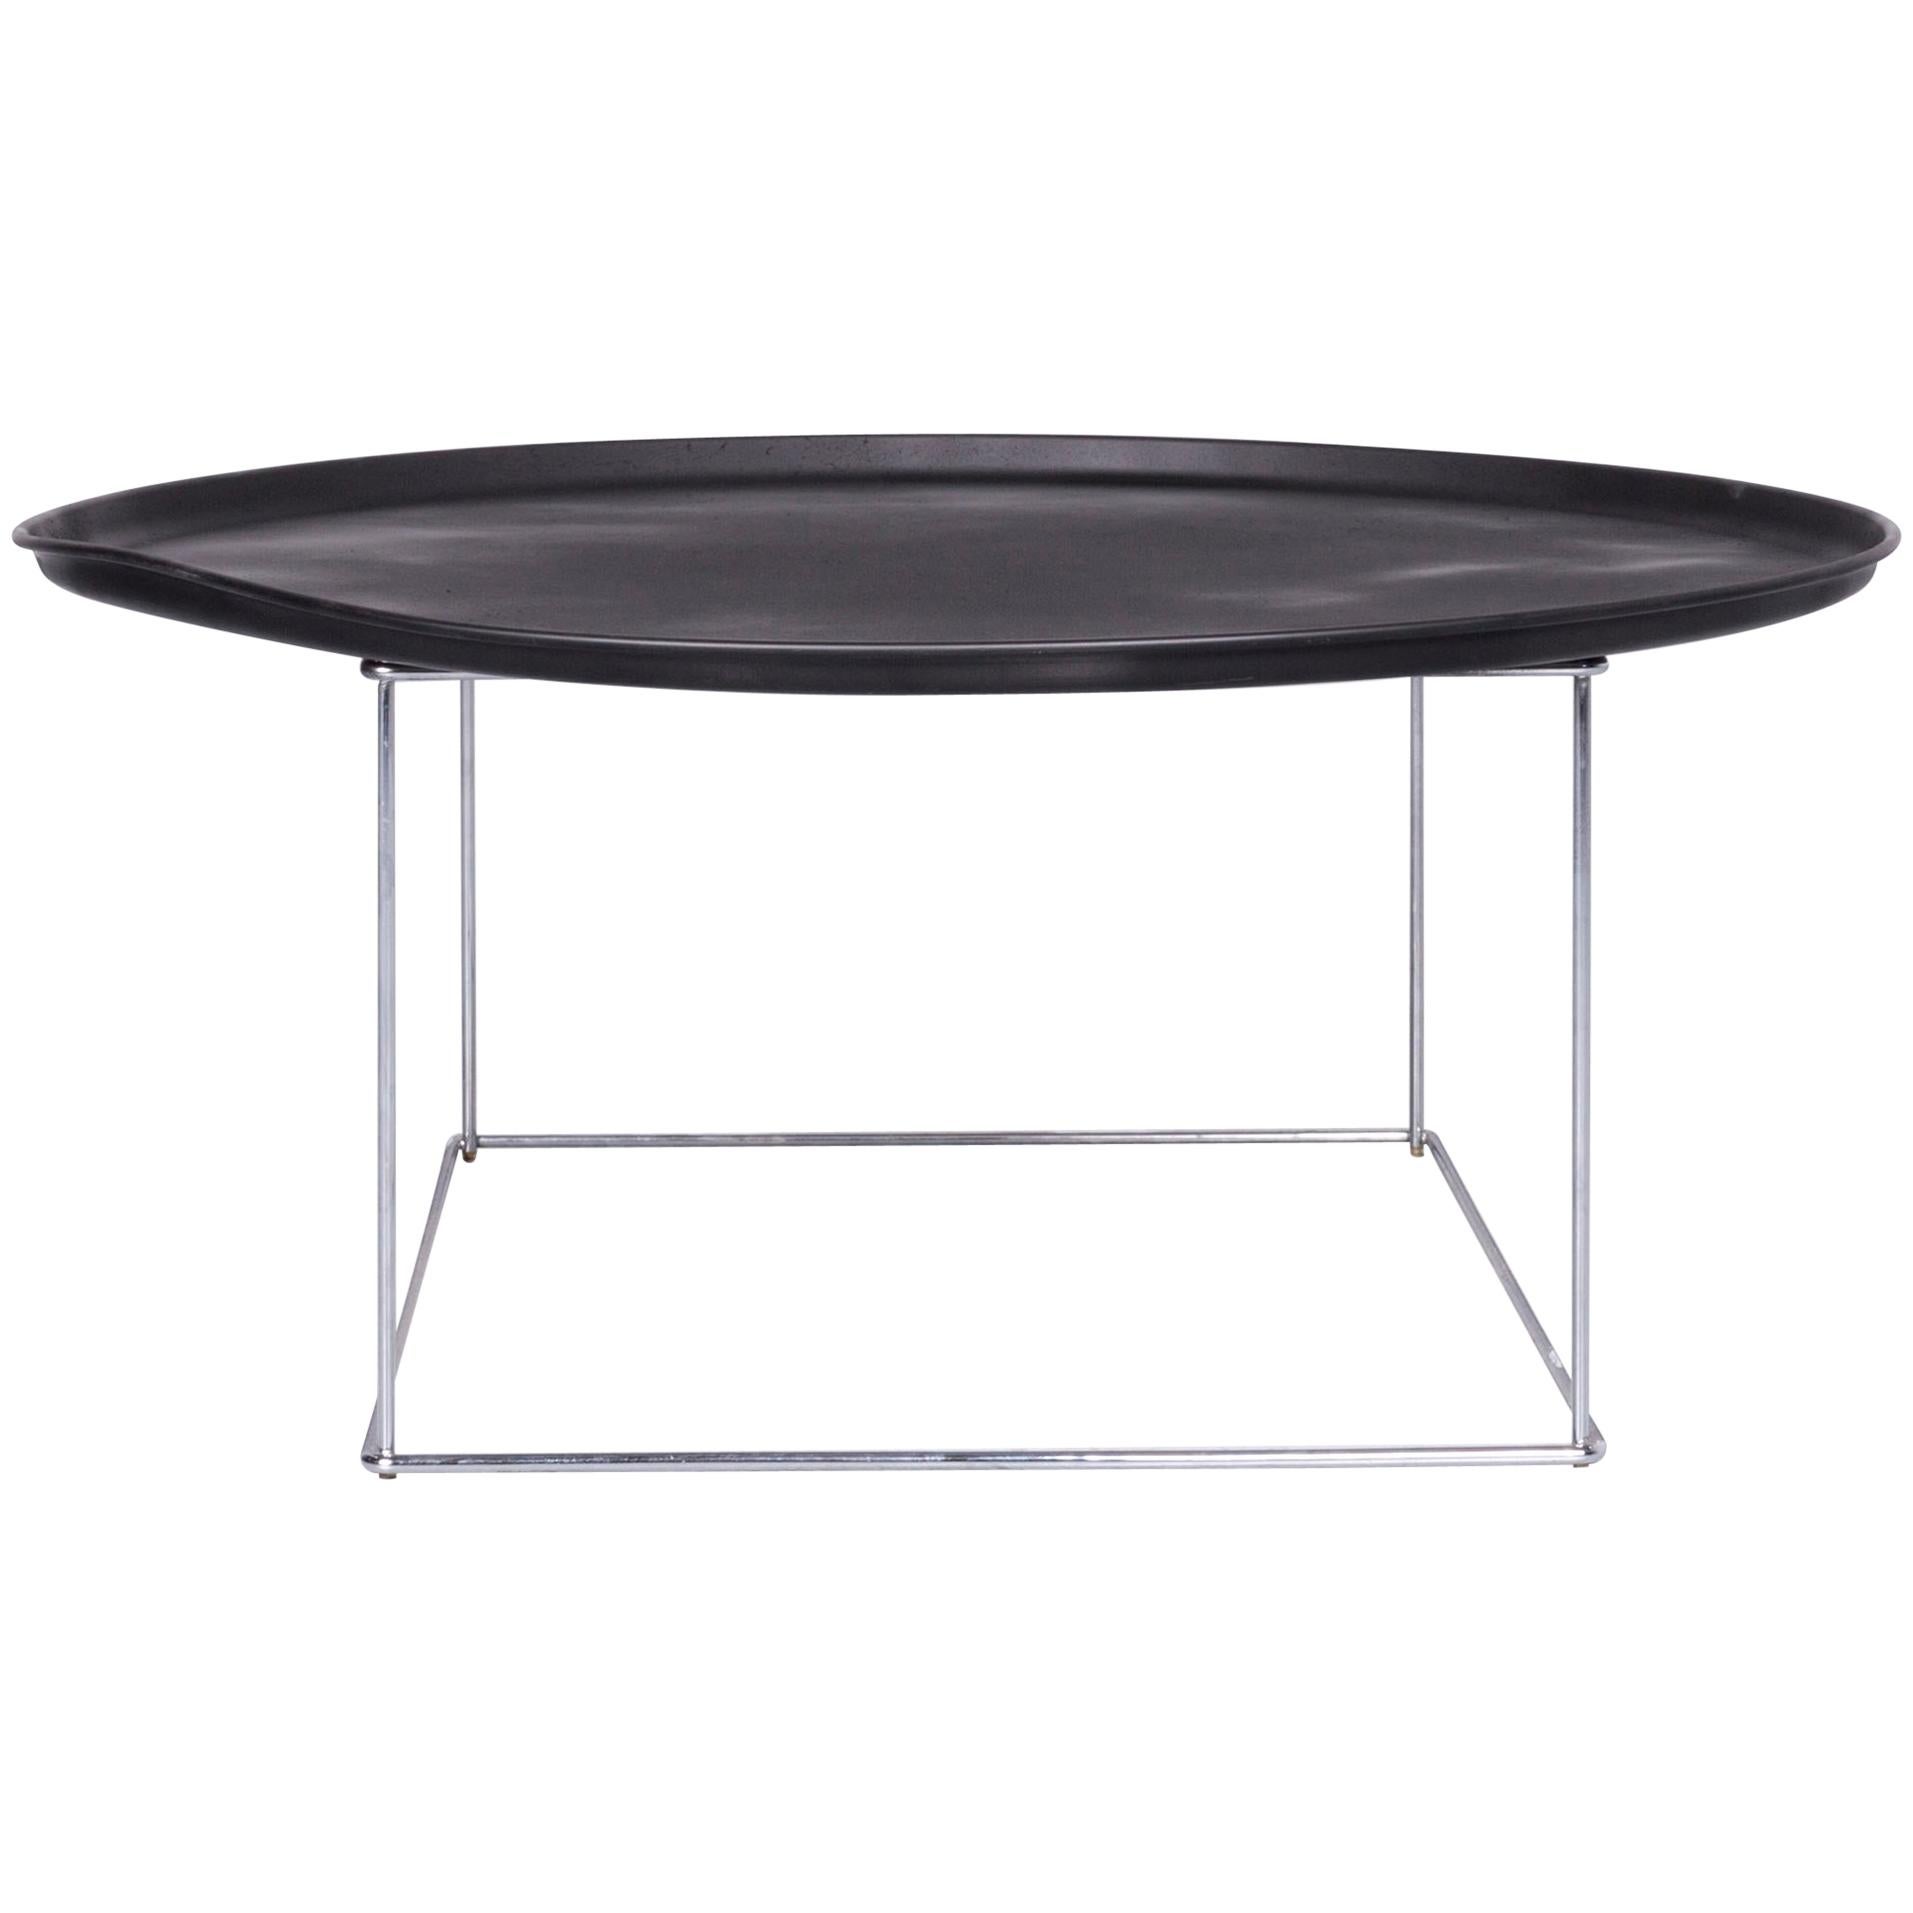 B&B Italia Fat-Fat Designer Table Black Metal Coffee Table